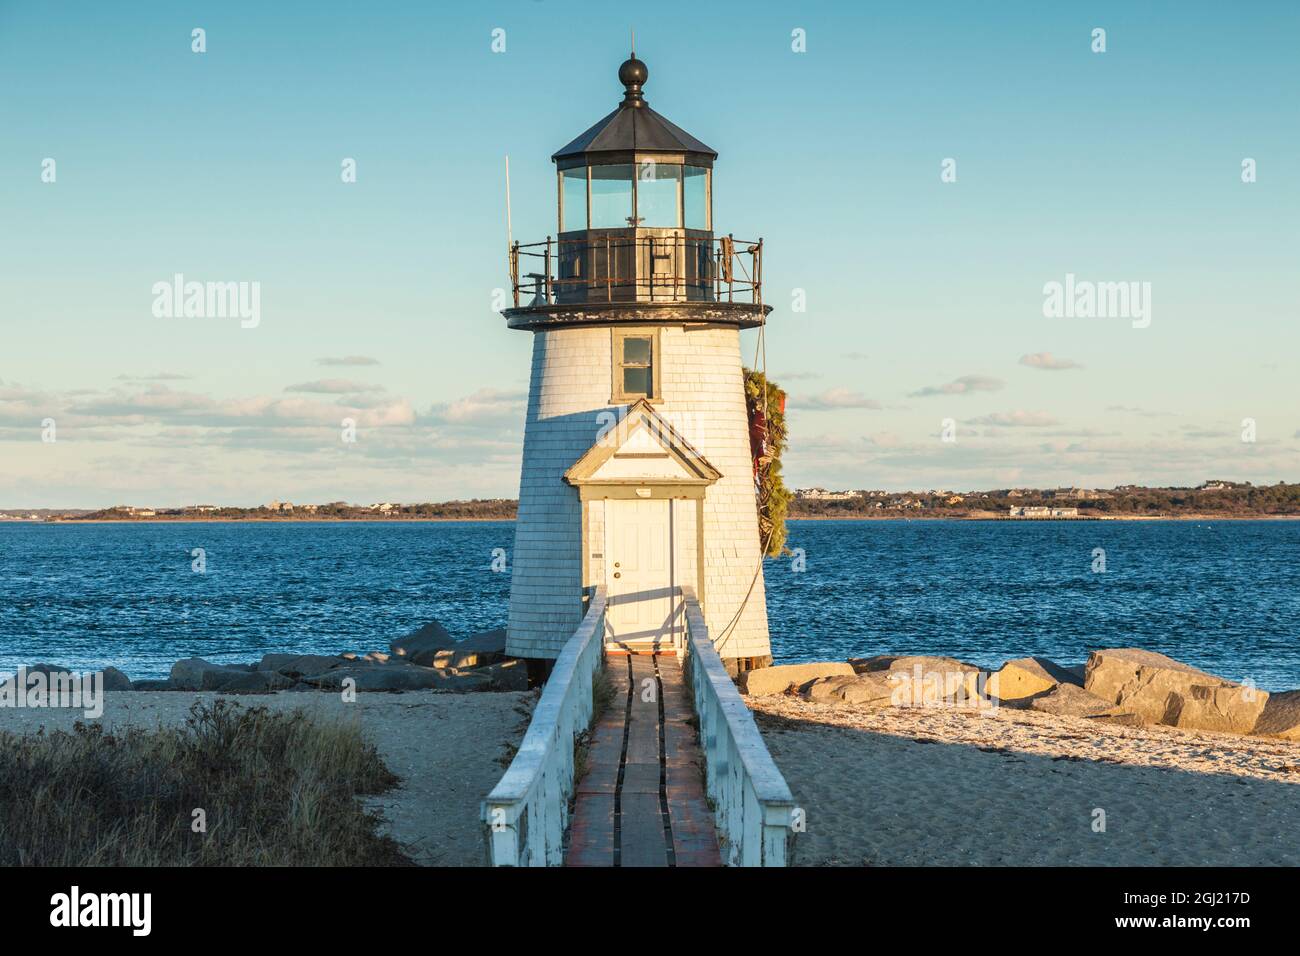 USA, Massachusetts, Nantucket Island. Nantucket Town, Brant Point Lighthouse with a Christmas wreath. Stock Photo